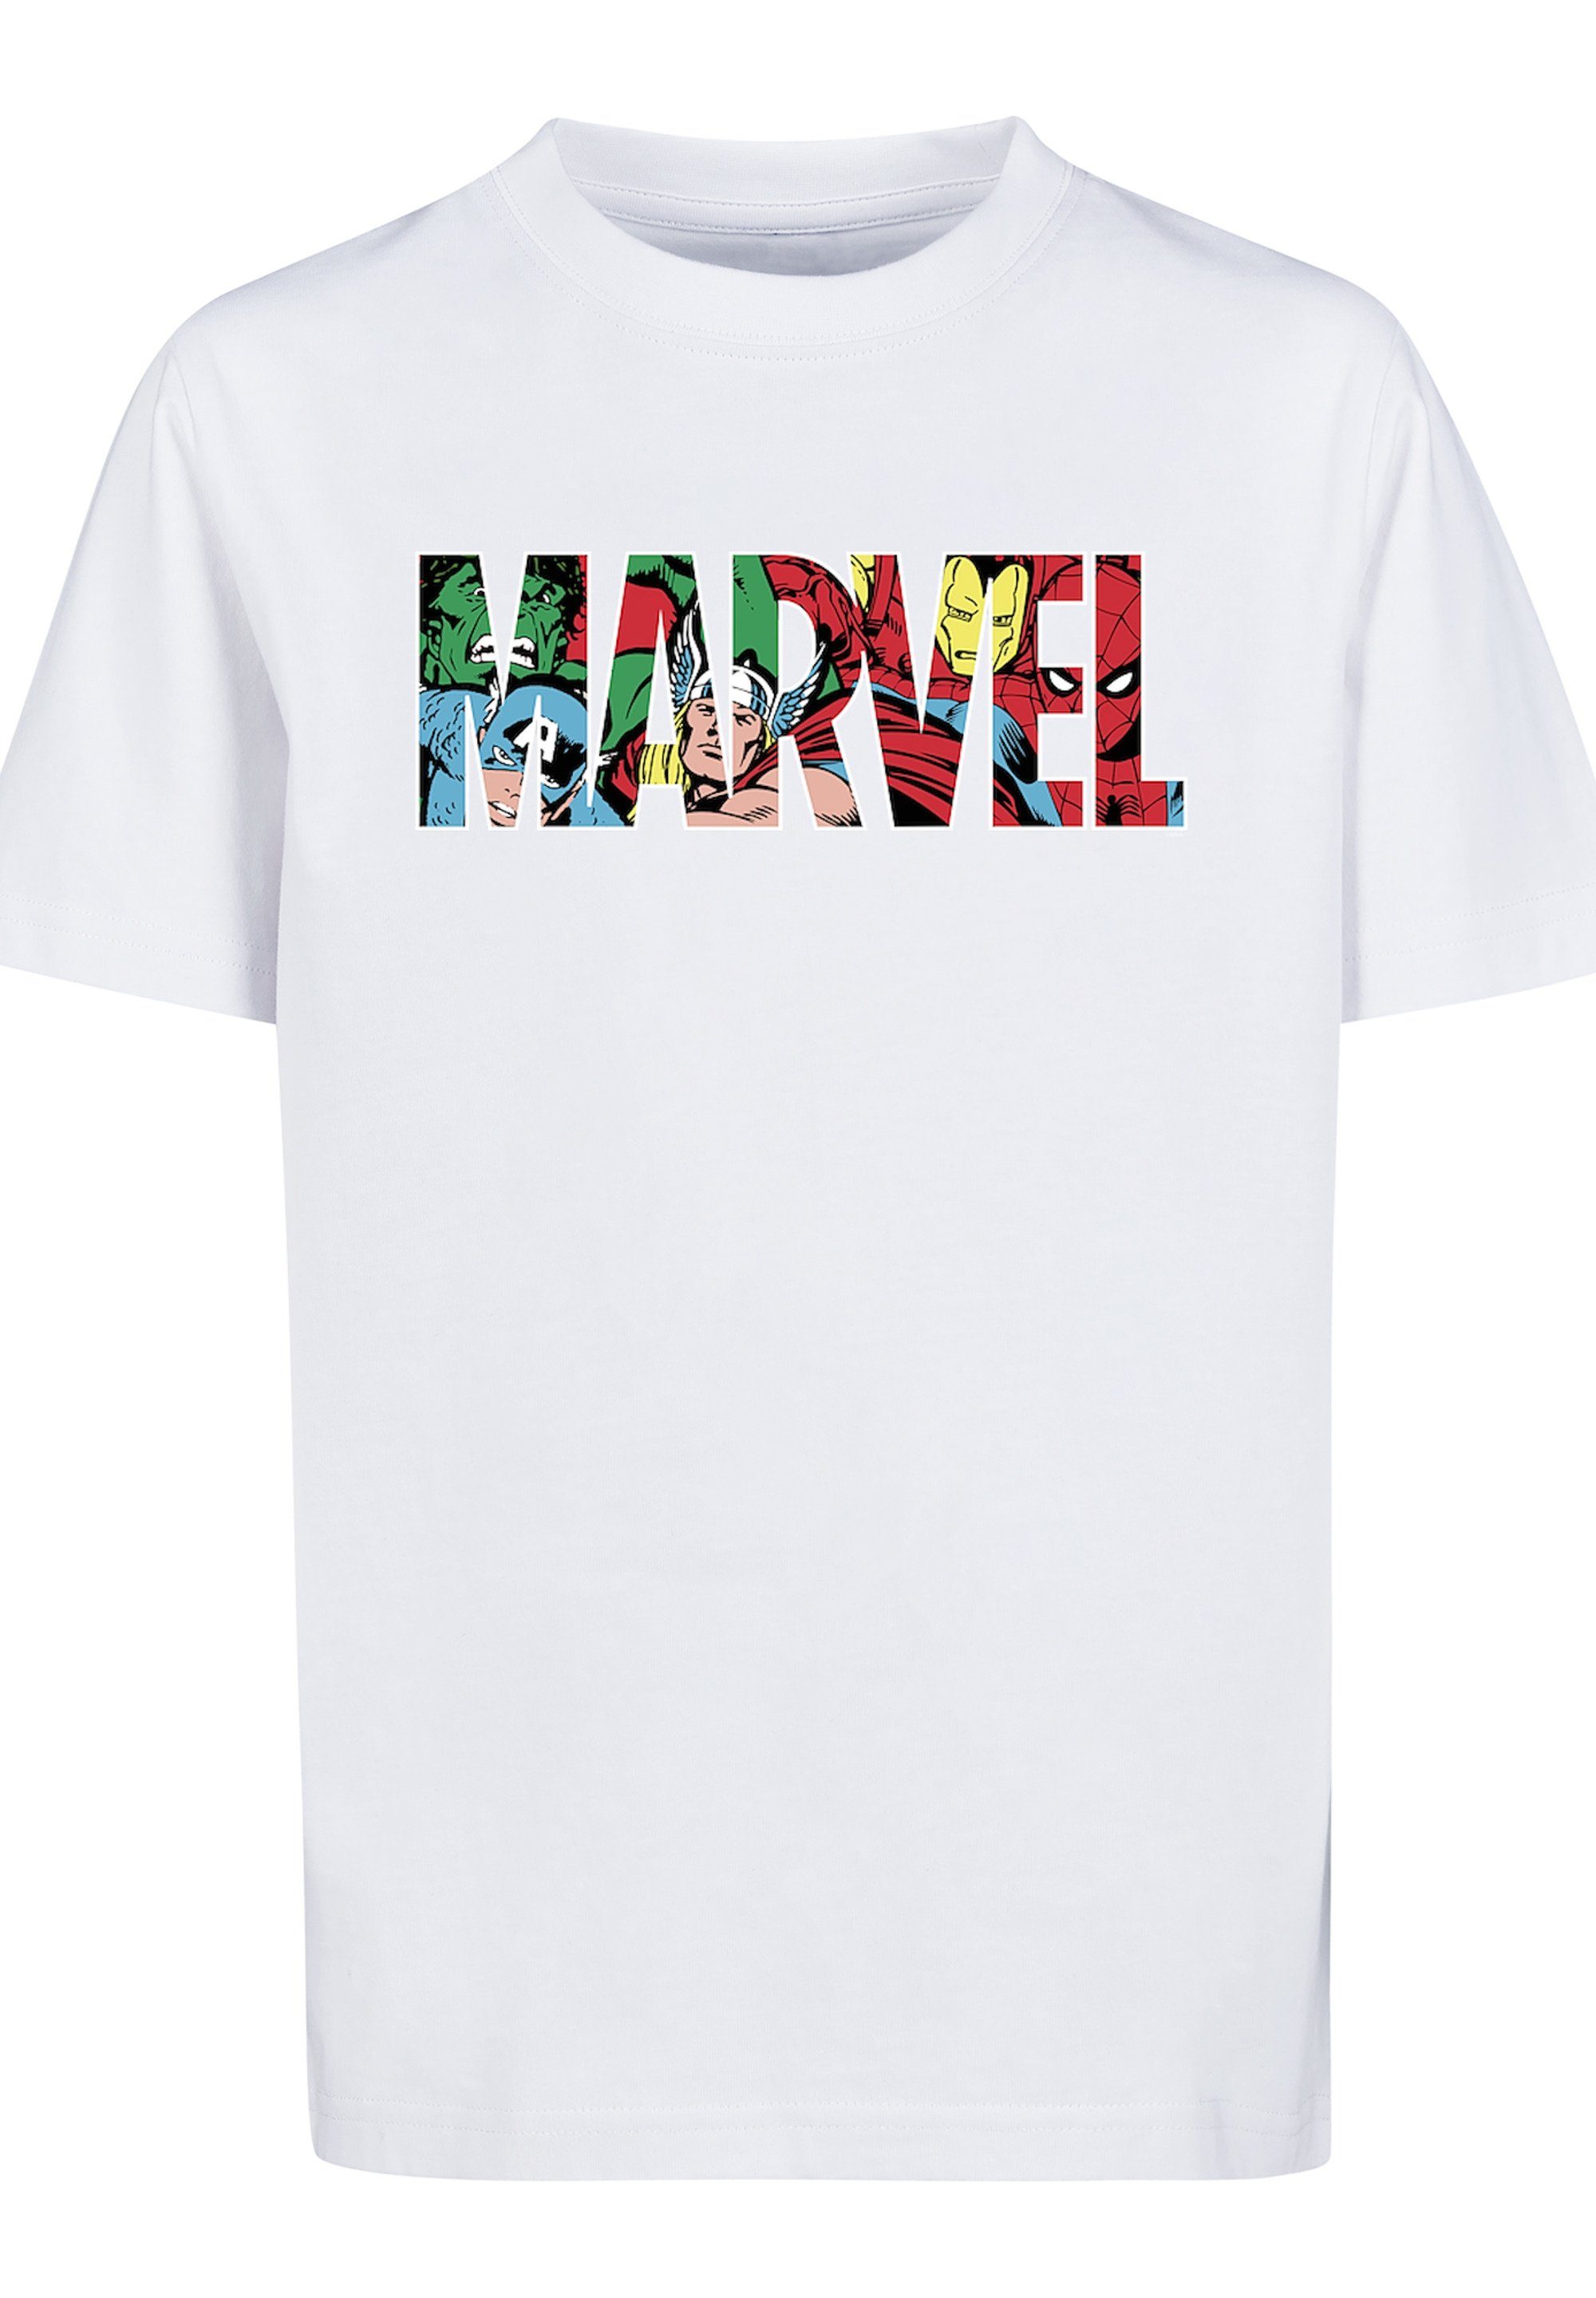 T-Shirt Fan weiß Print Logo Avengers Superhelden Marvel F4NT4STIC Characters Merch